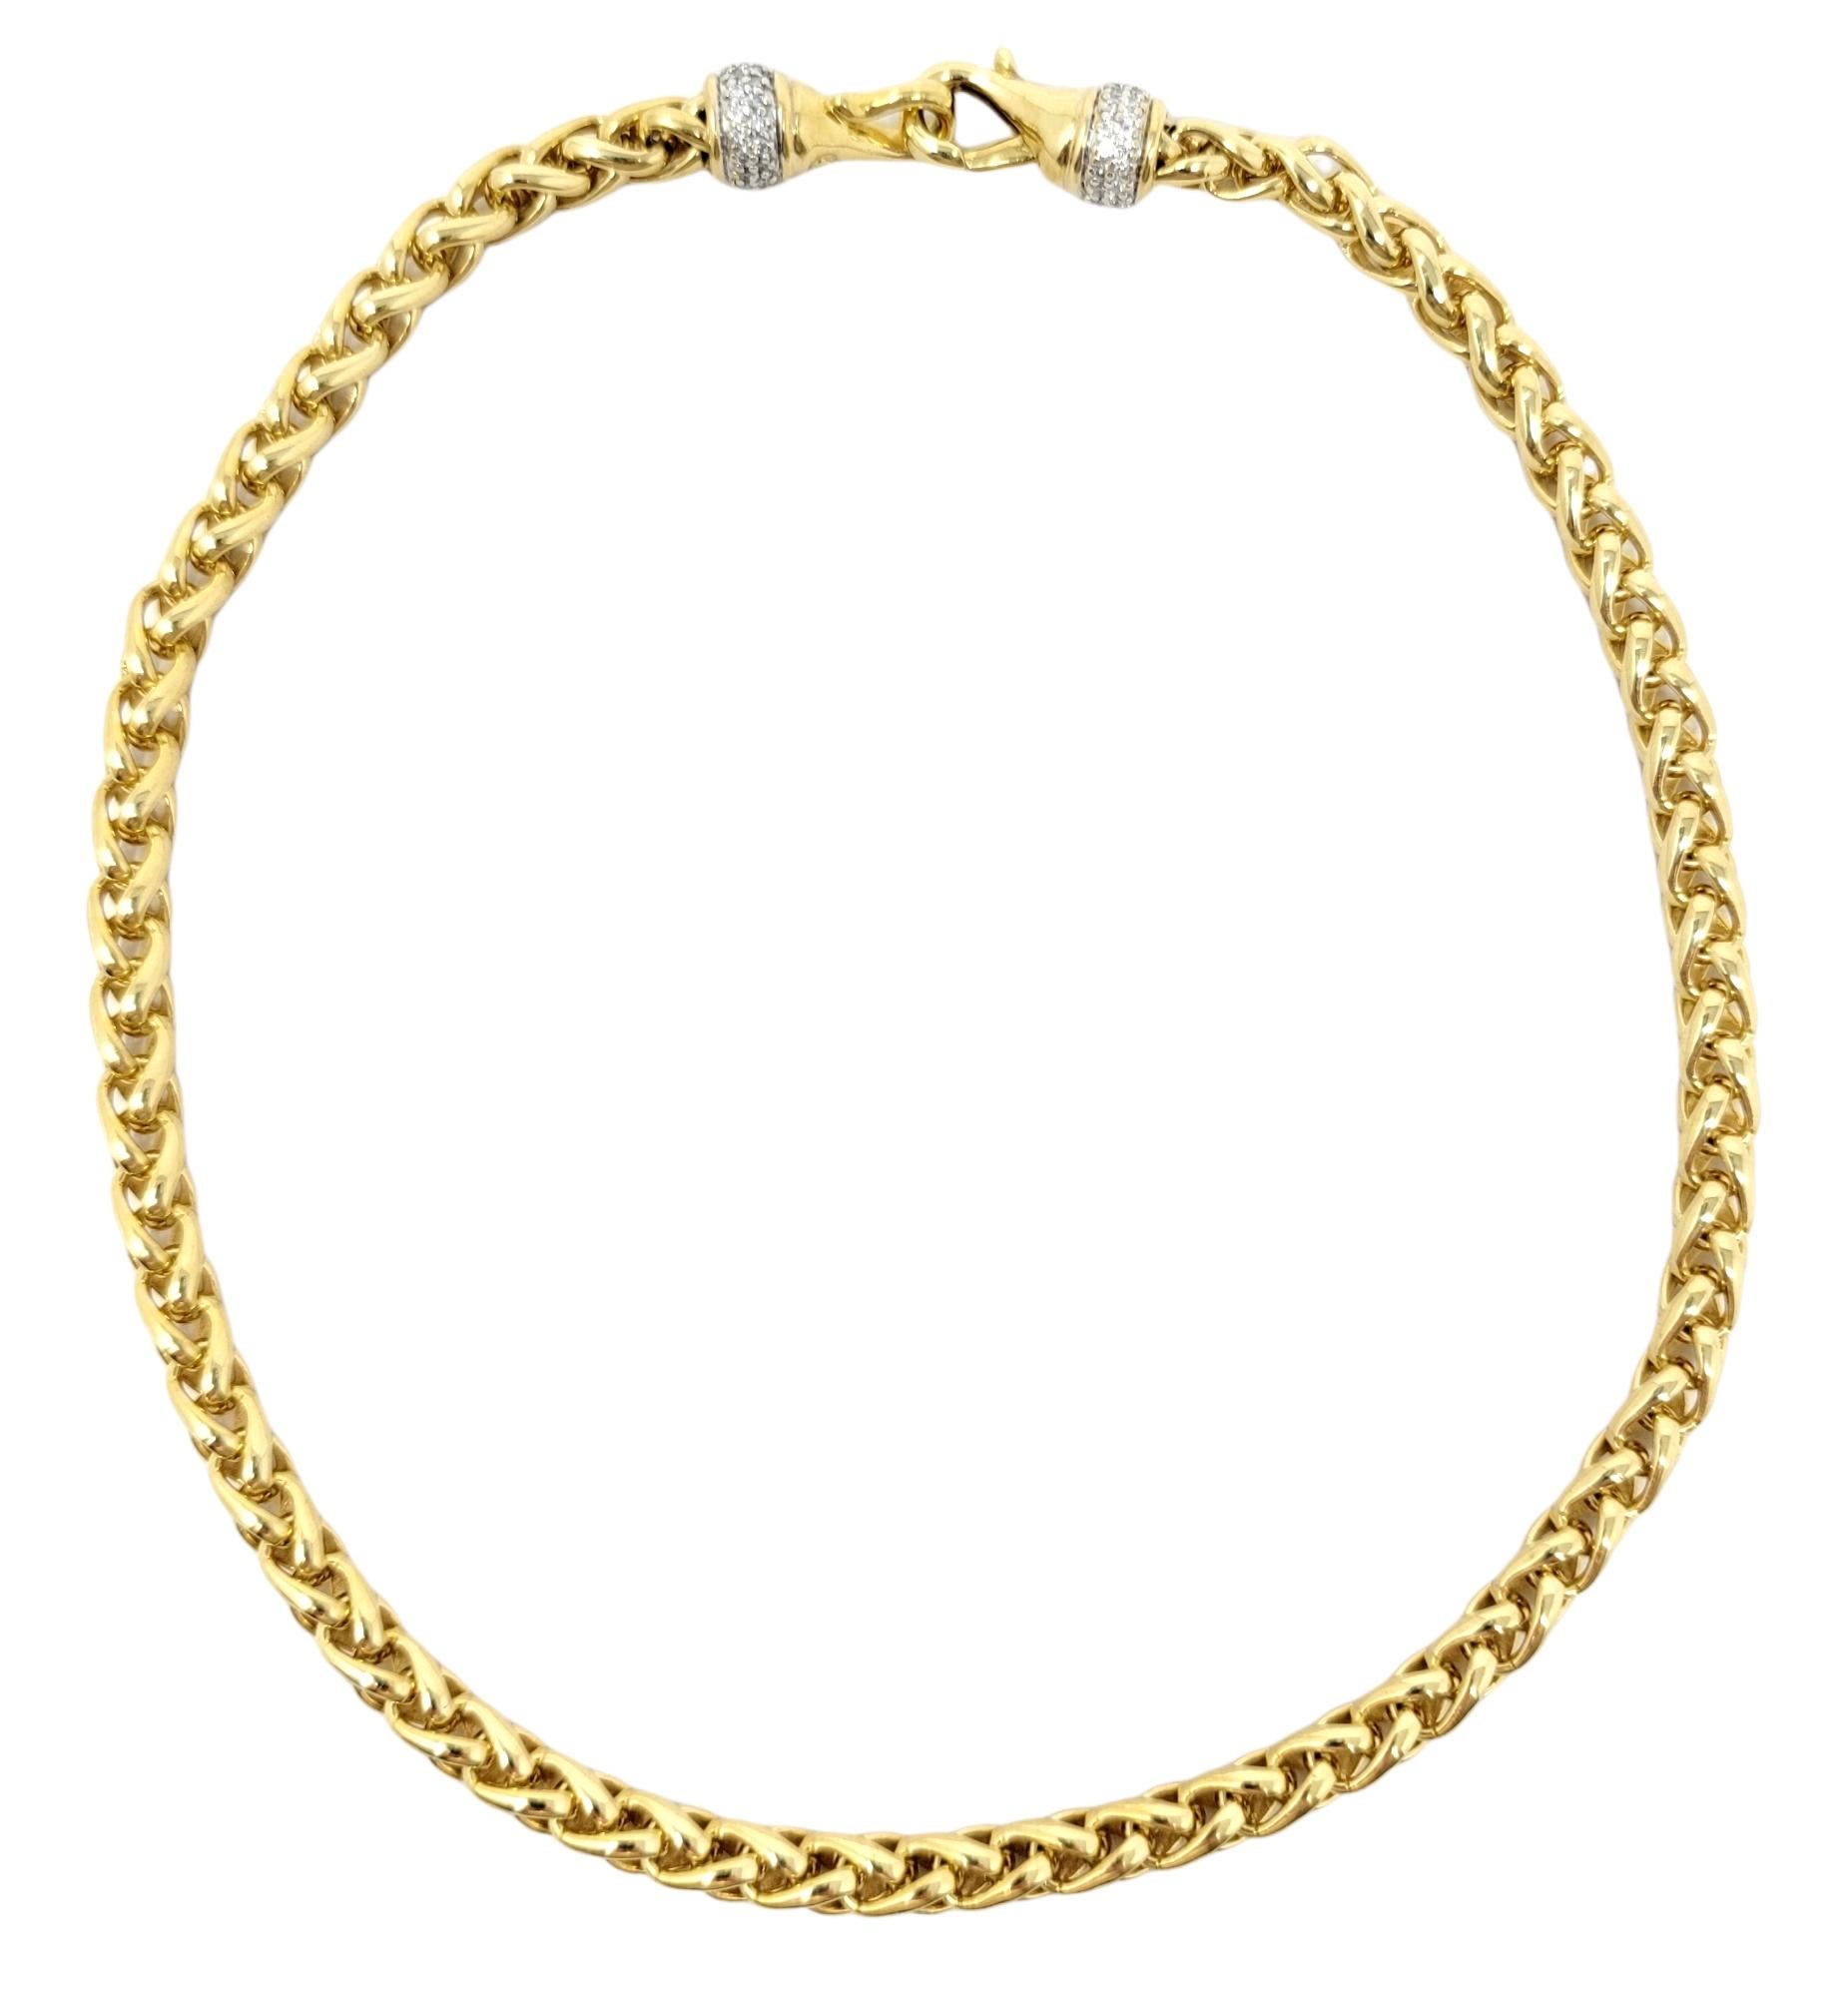 David Yurman 18 Karat Yellow Gold Wheat Chain Link Necklace with Diamond Accents 1